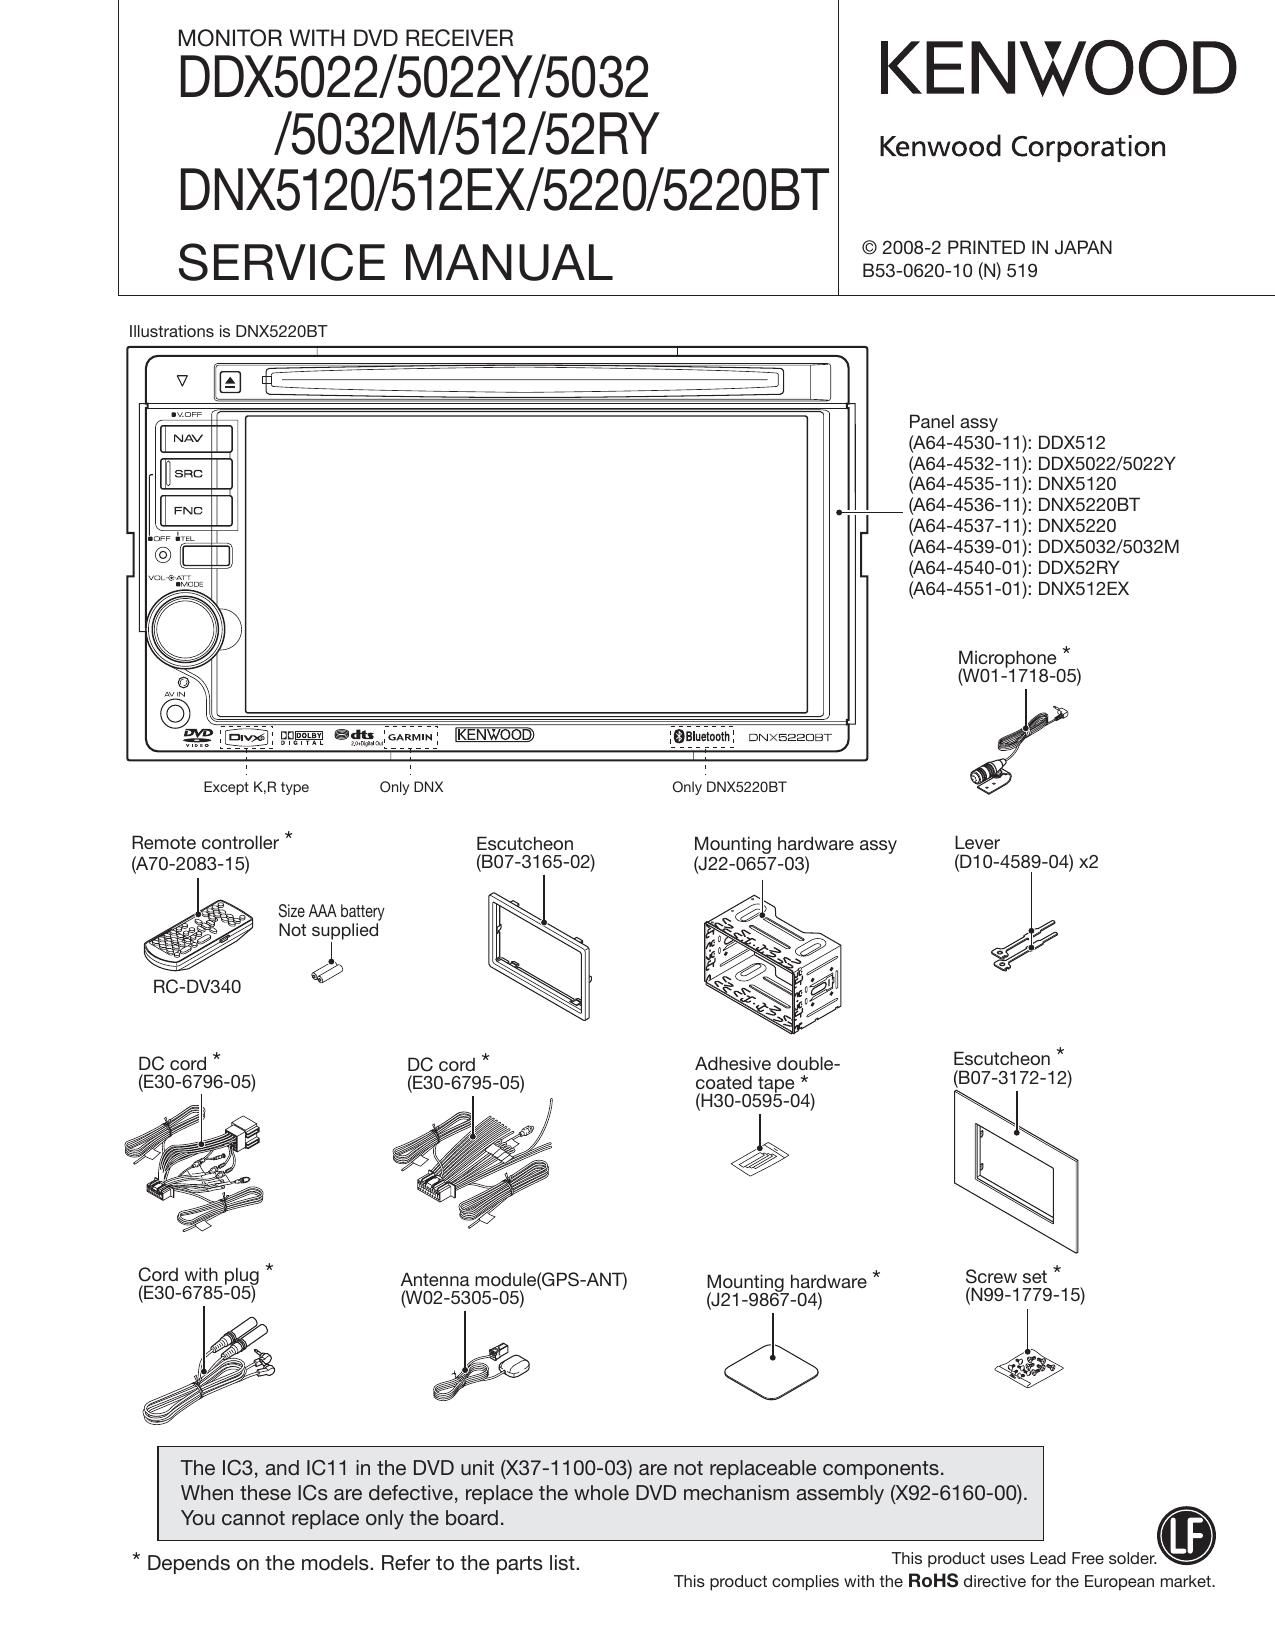 Kenwood DNX 5120 Service Manual